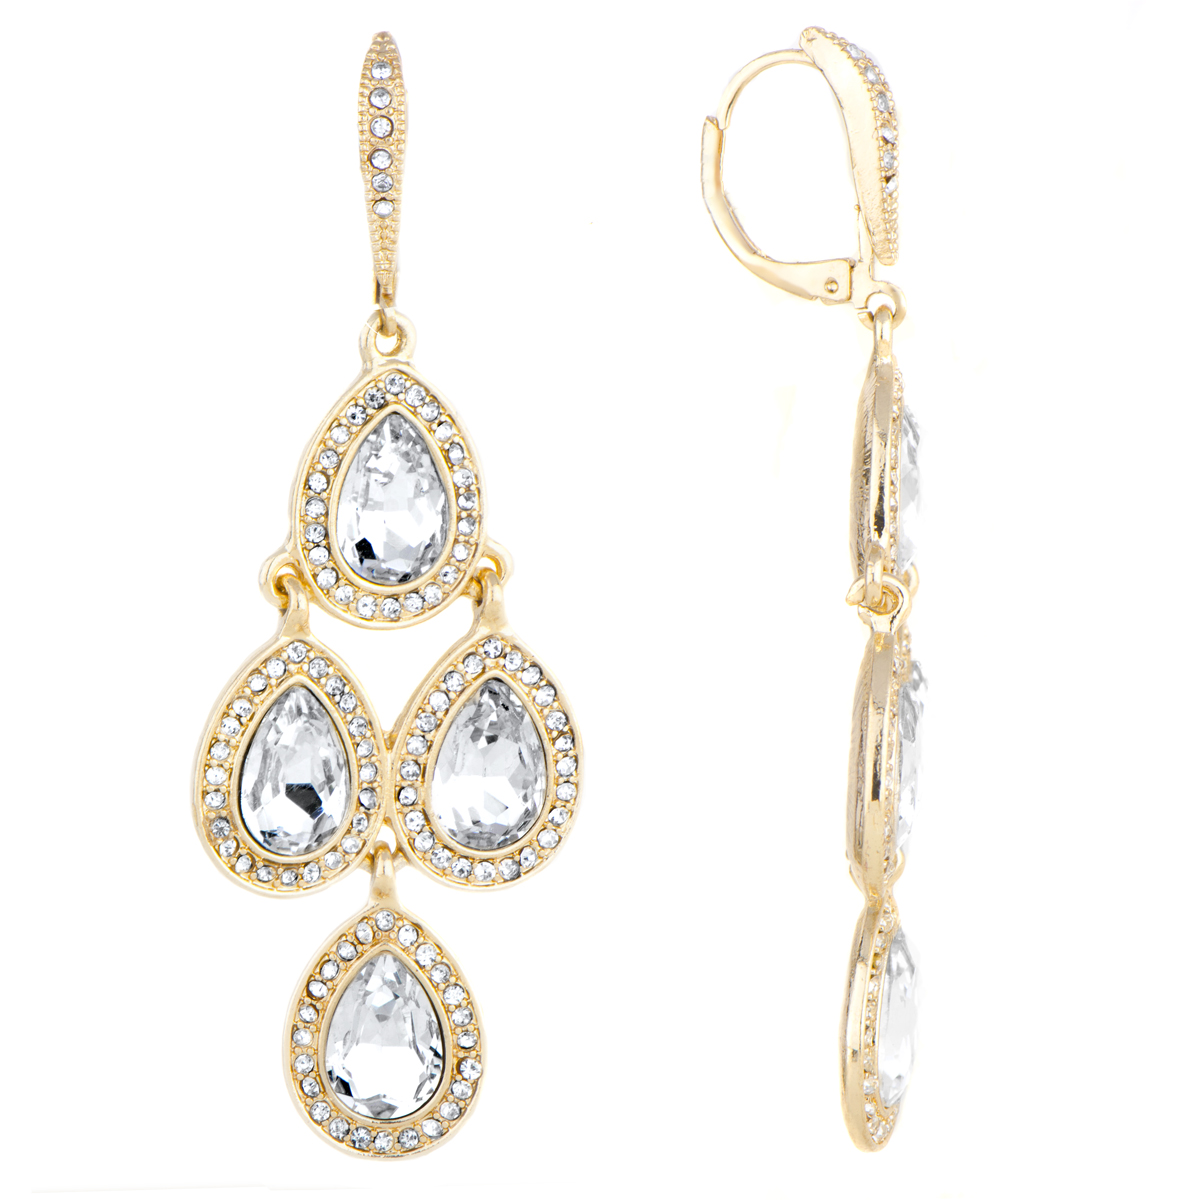 gold chandelier earrings akarau0027s goldtone rhinestone chandelier earrings. roll off image to close  zoom AQIHSHK